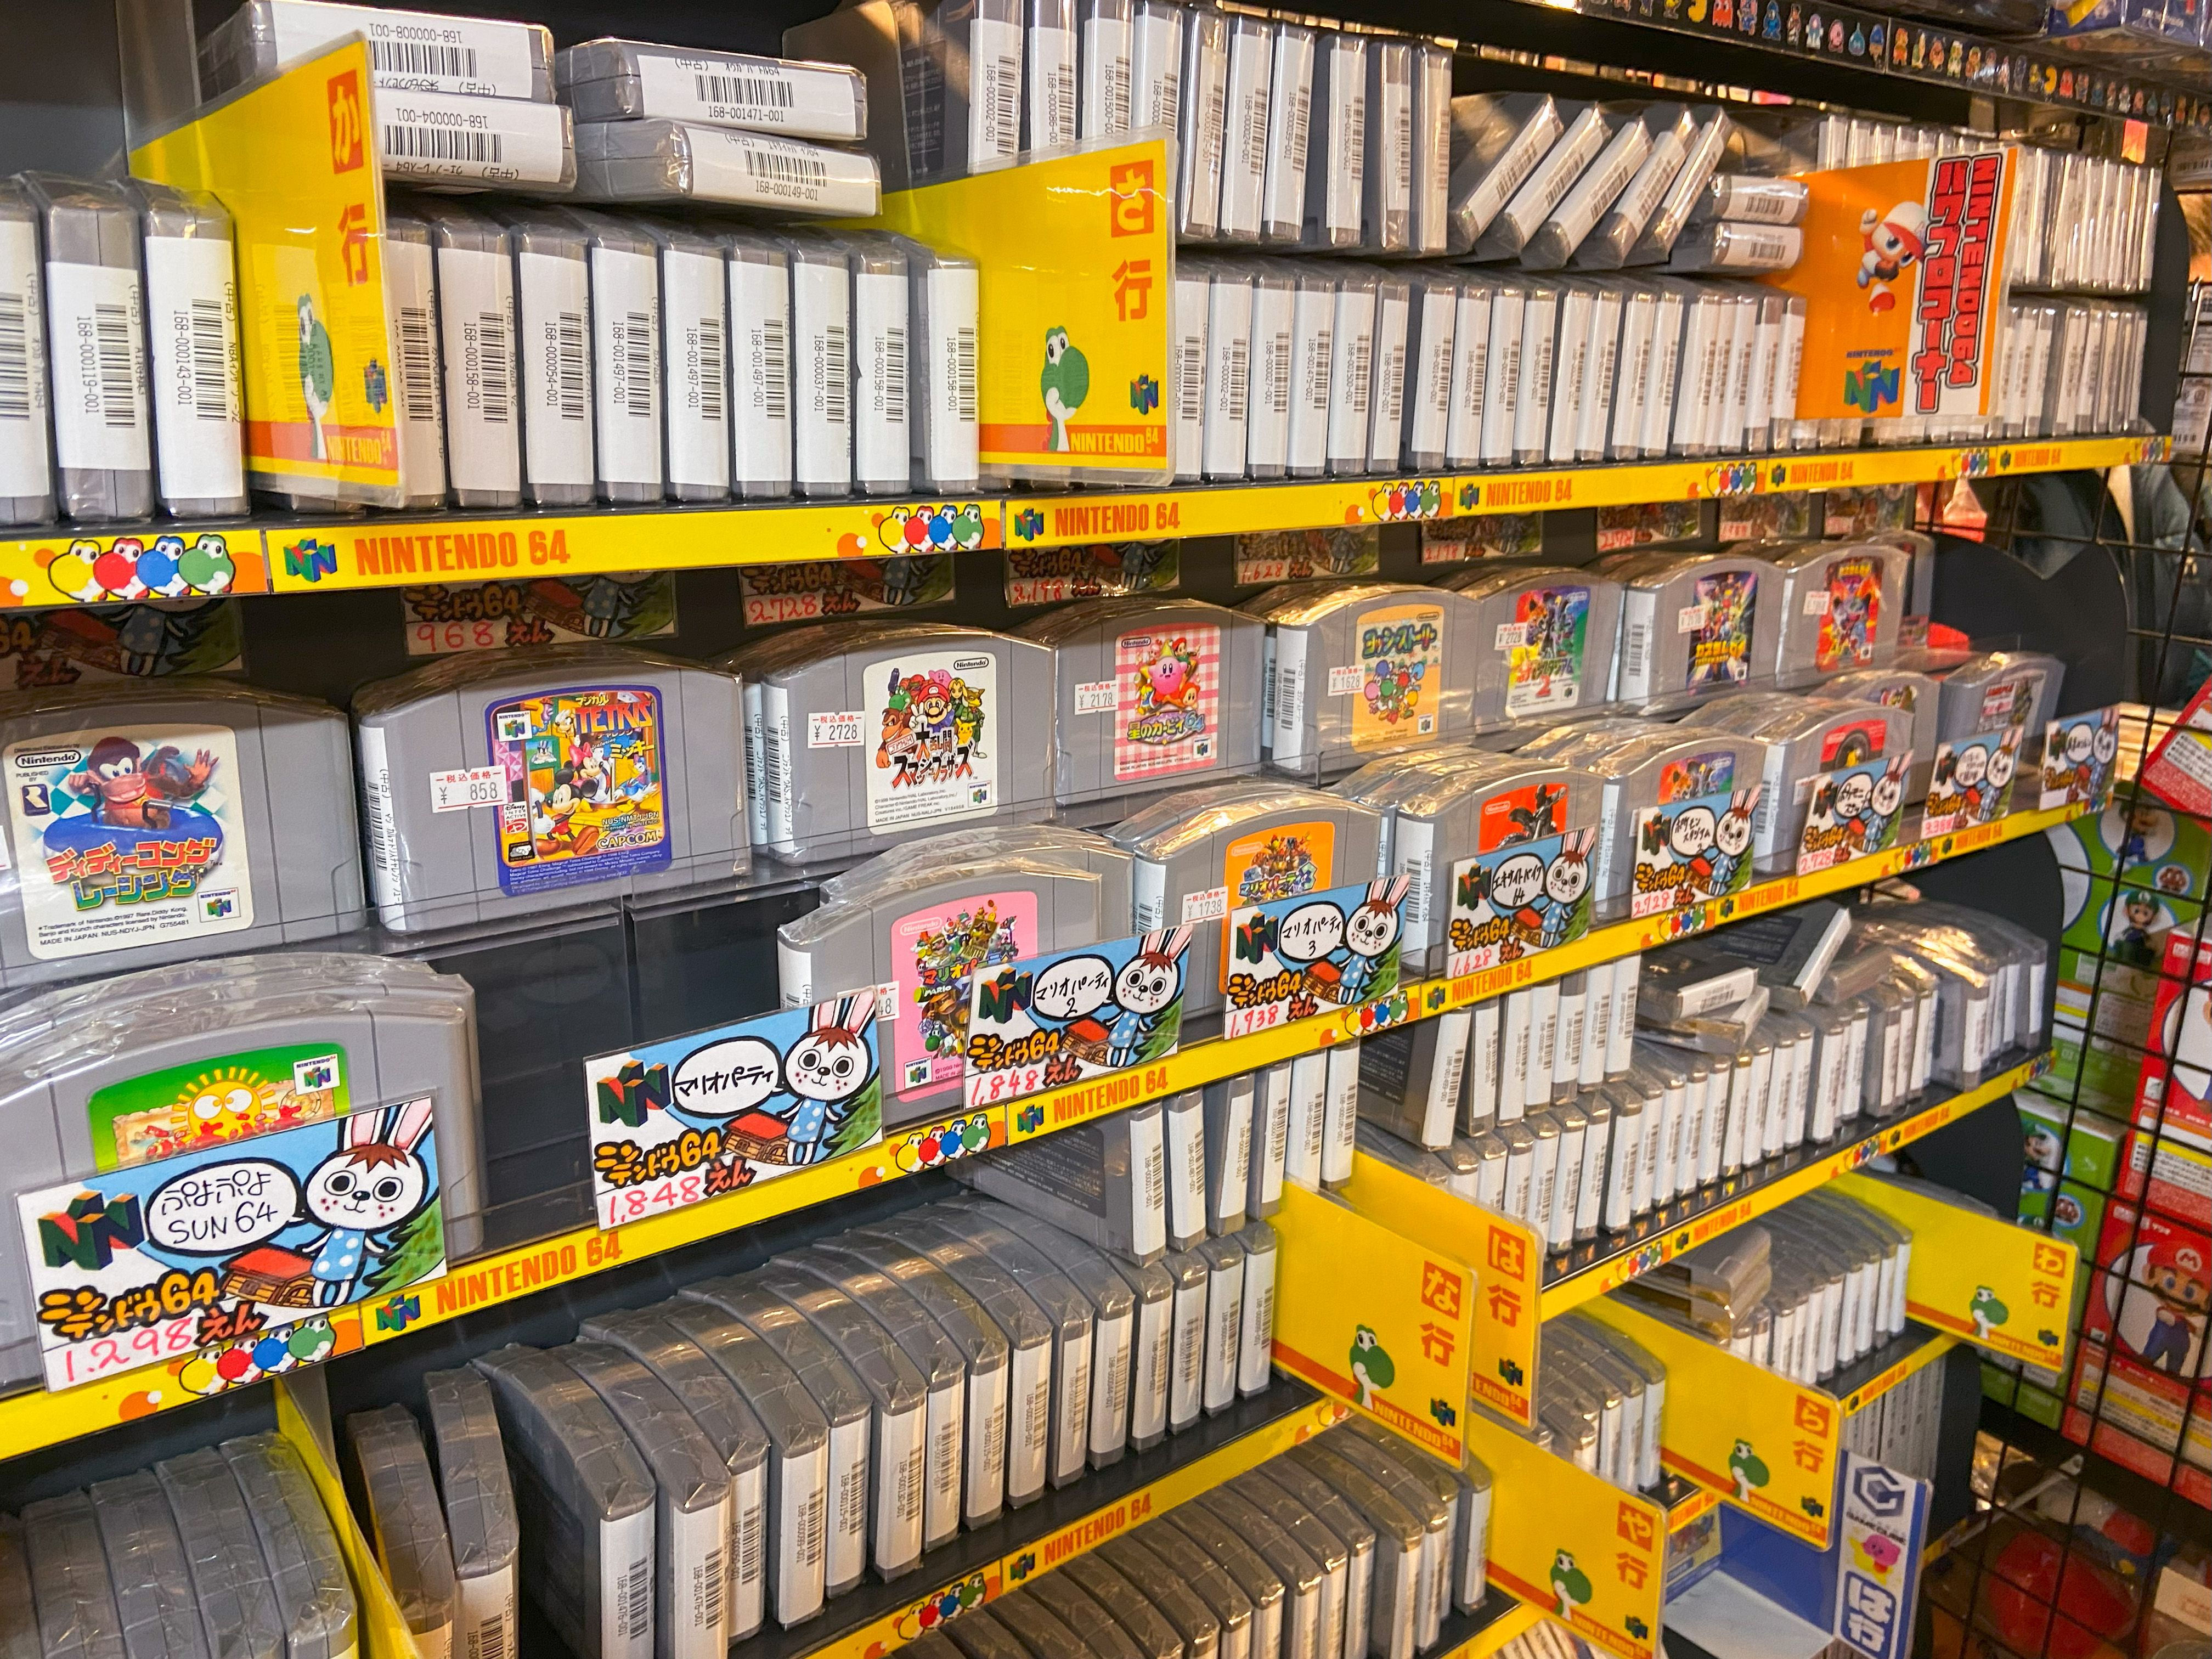 Nintendo 64 games on sale